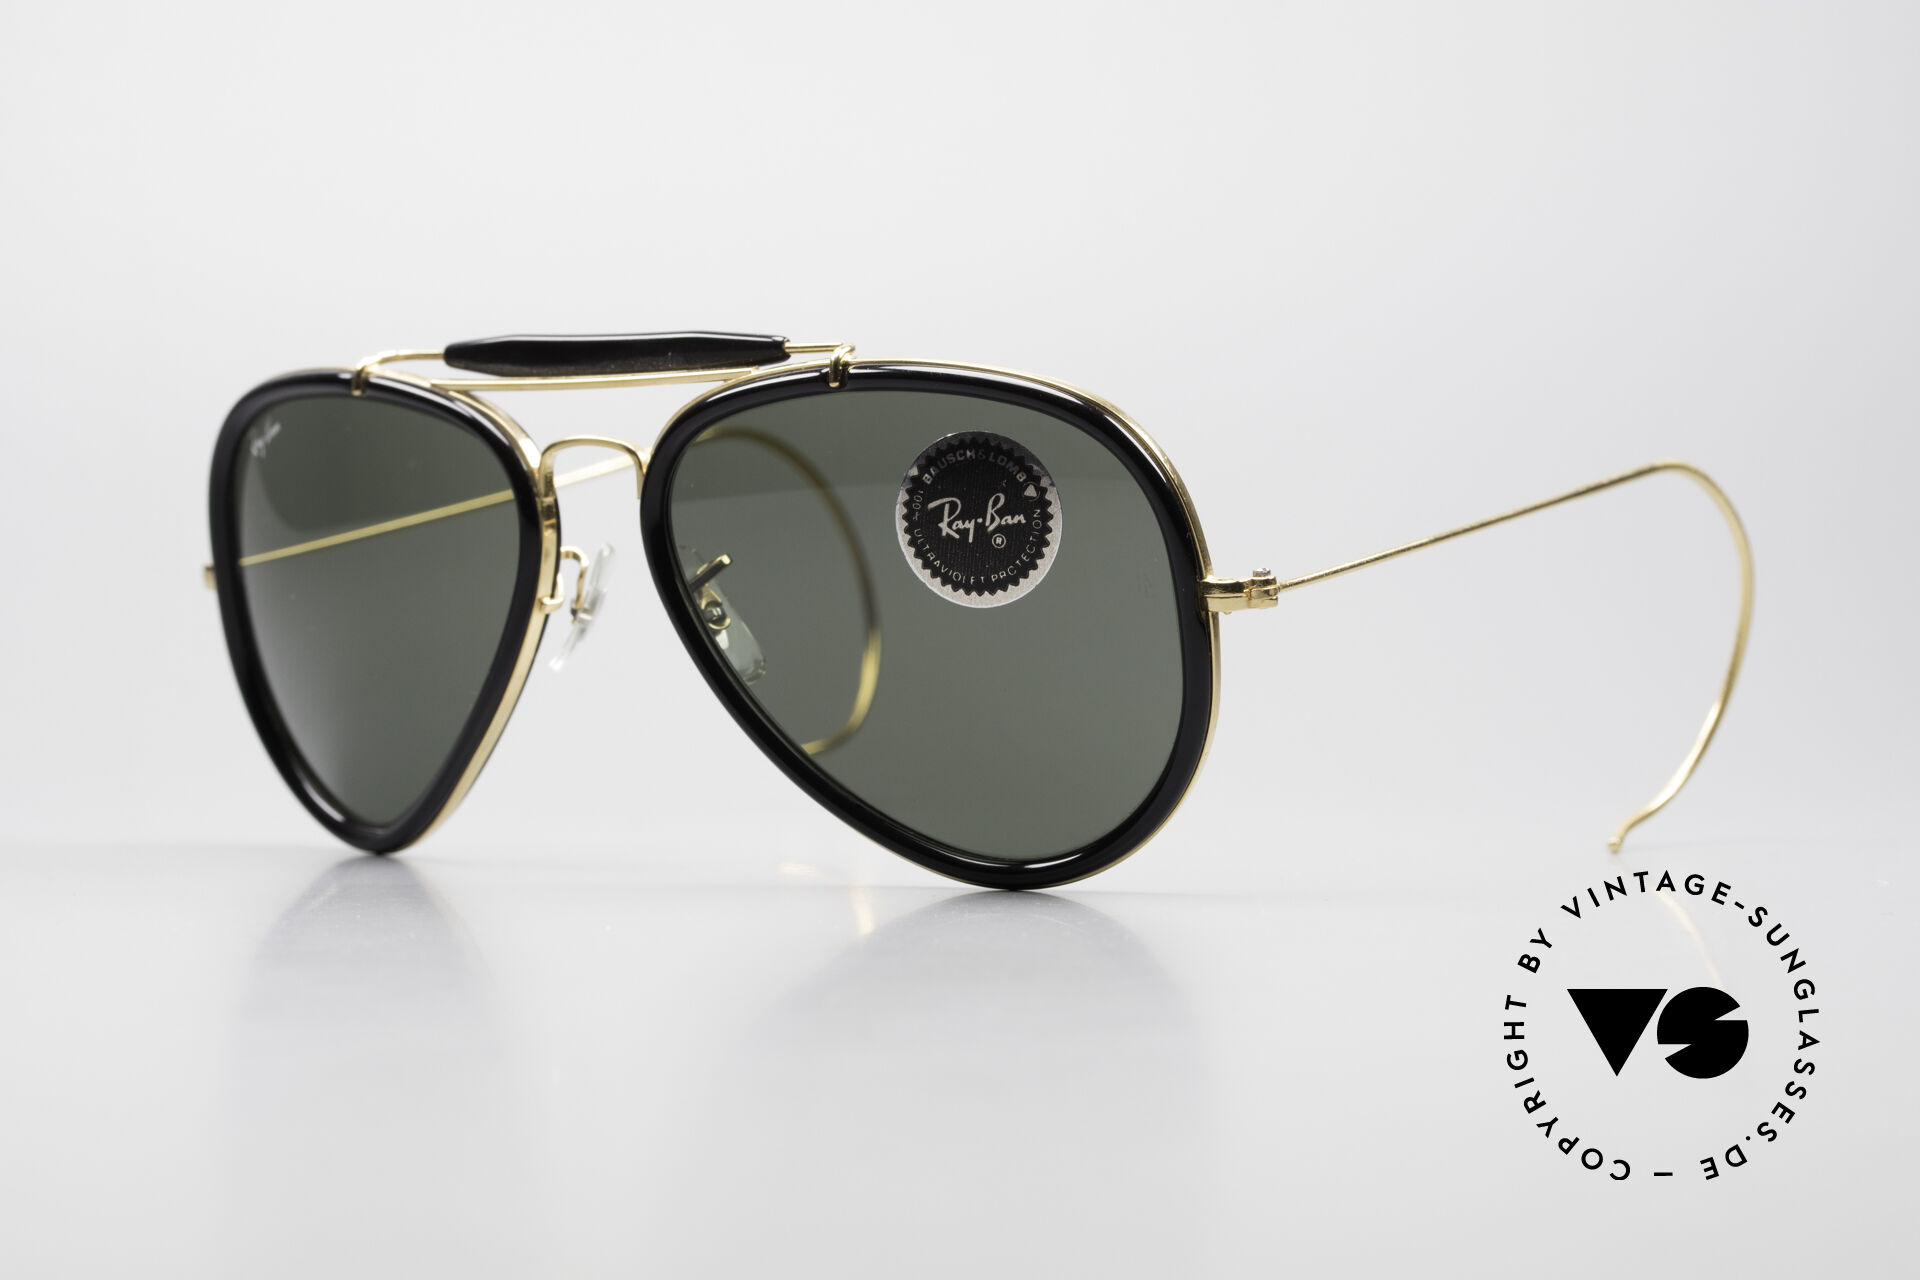 Sunglasses Ray Ban Traditionals USA Aviator Shades 80s